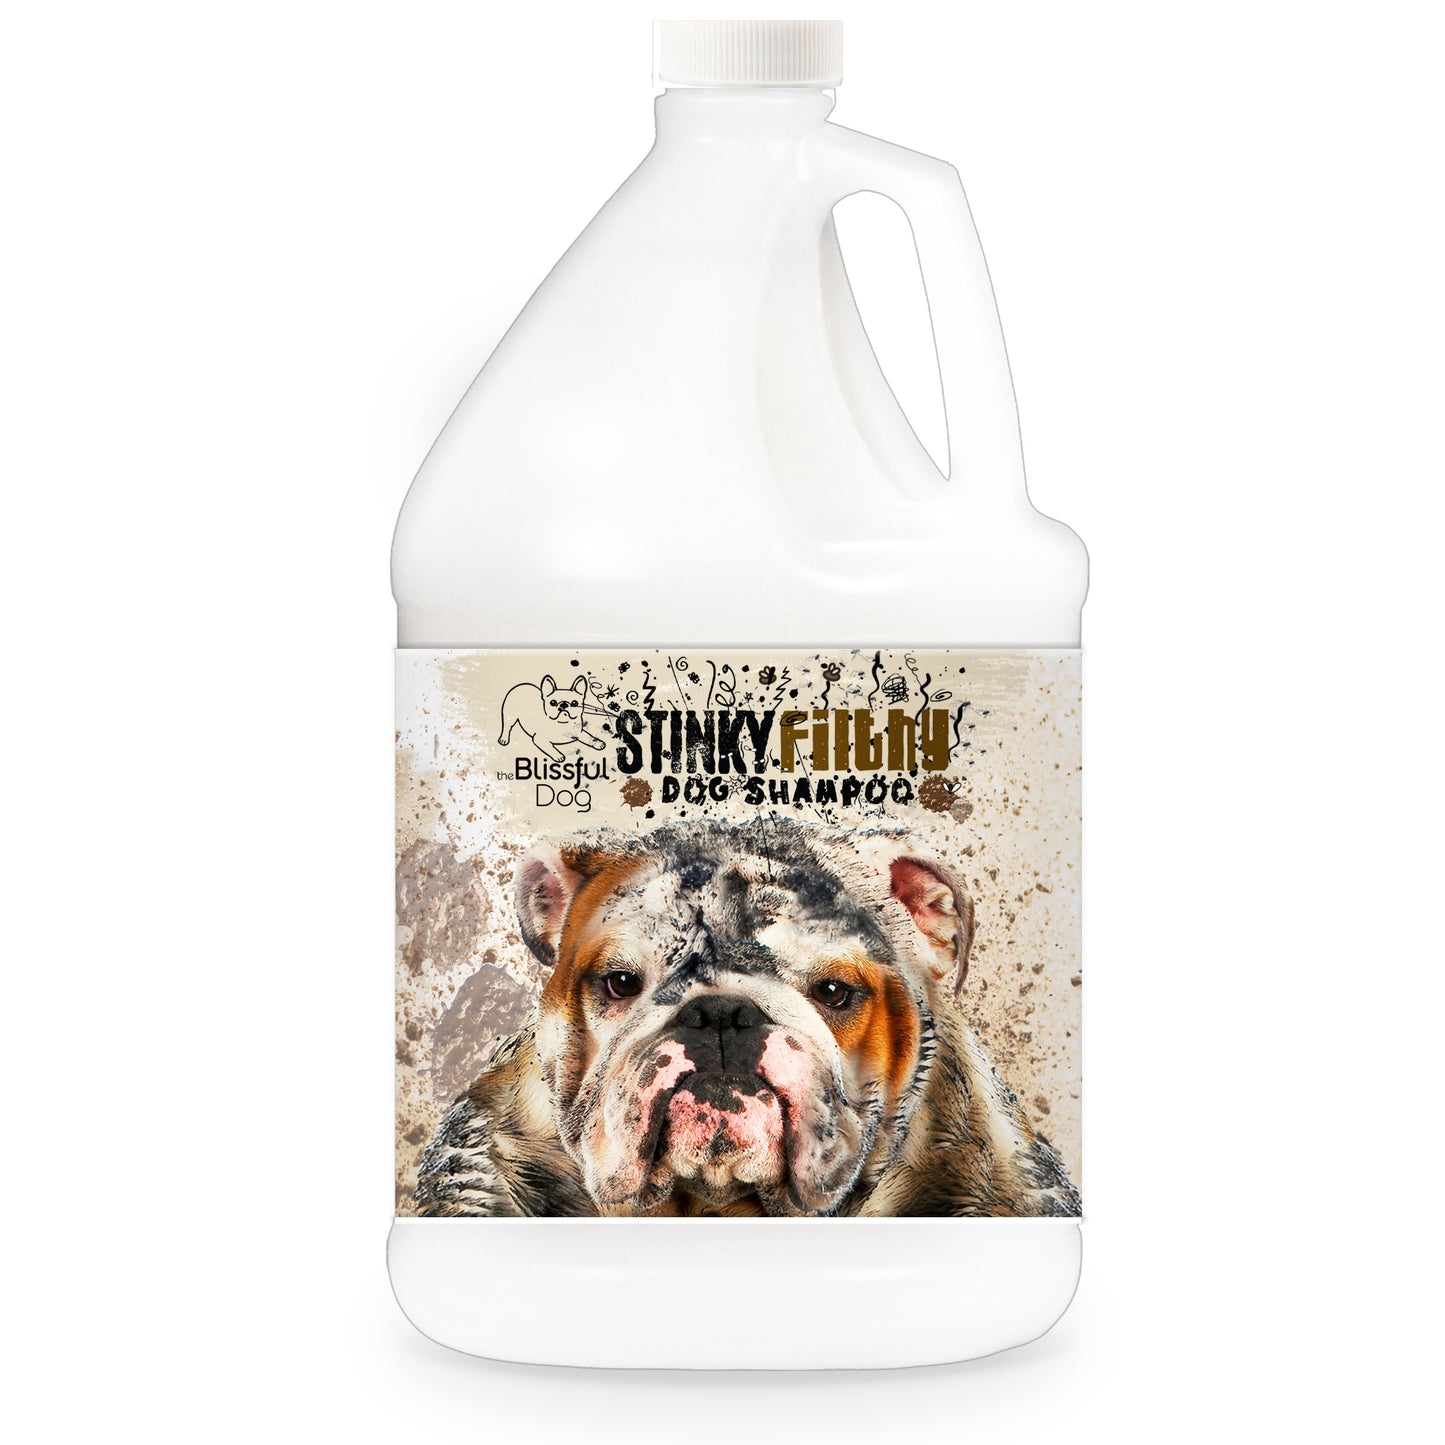 Stinky Filthy Dog Shampoo & Soap